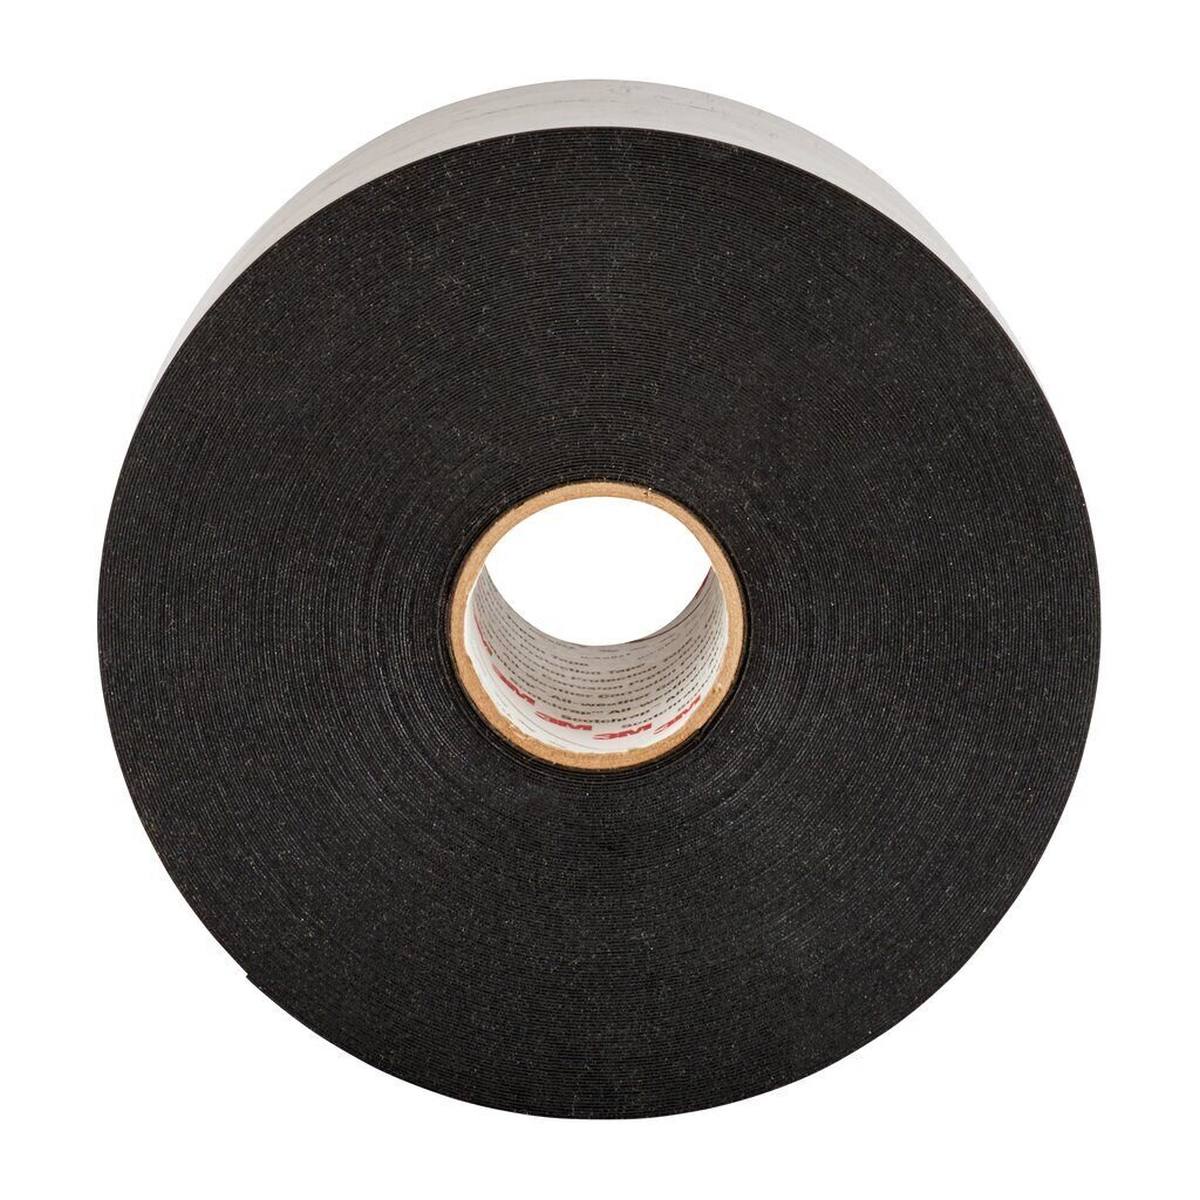 3M Scotchrap 51 corrosion protection tape, black, 100 mm x 30 m, 0.5 mm